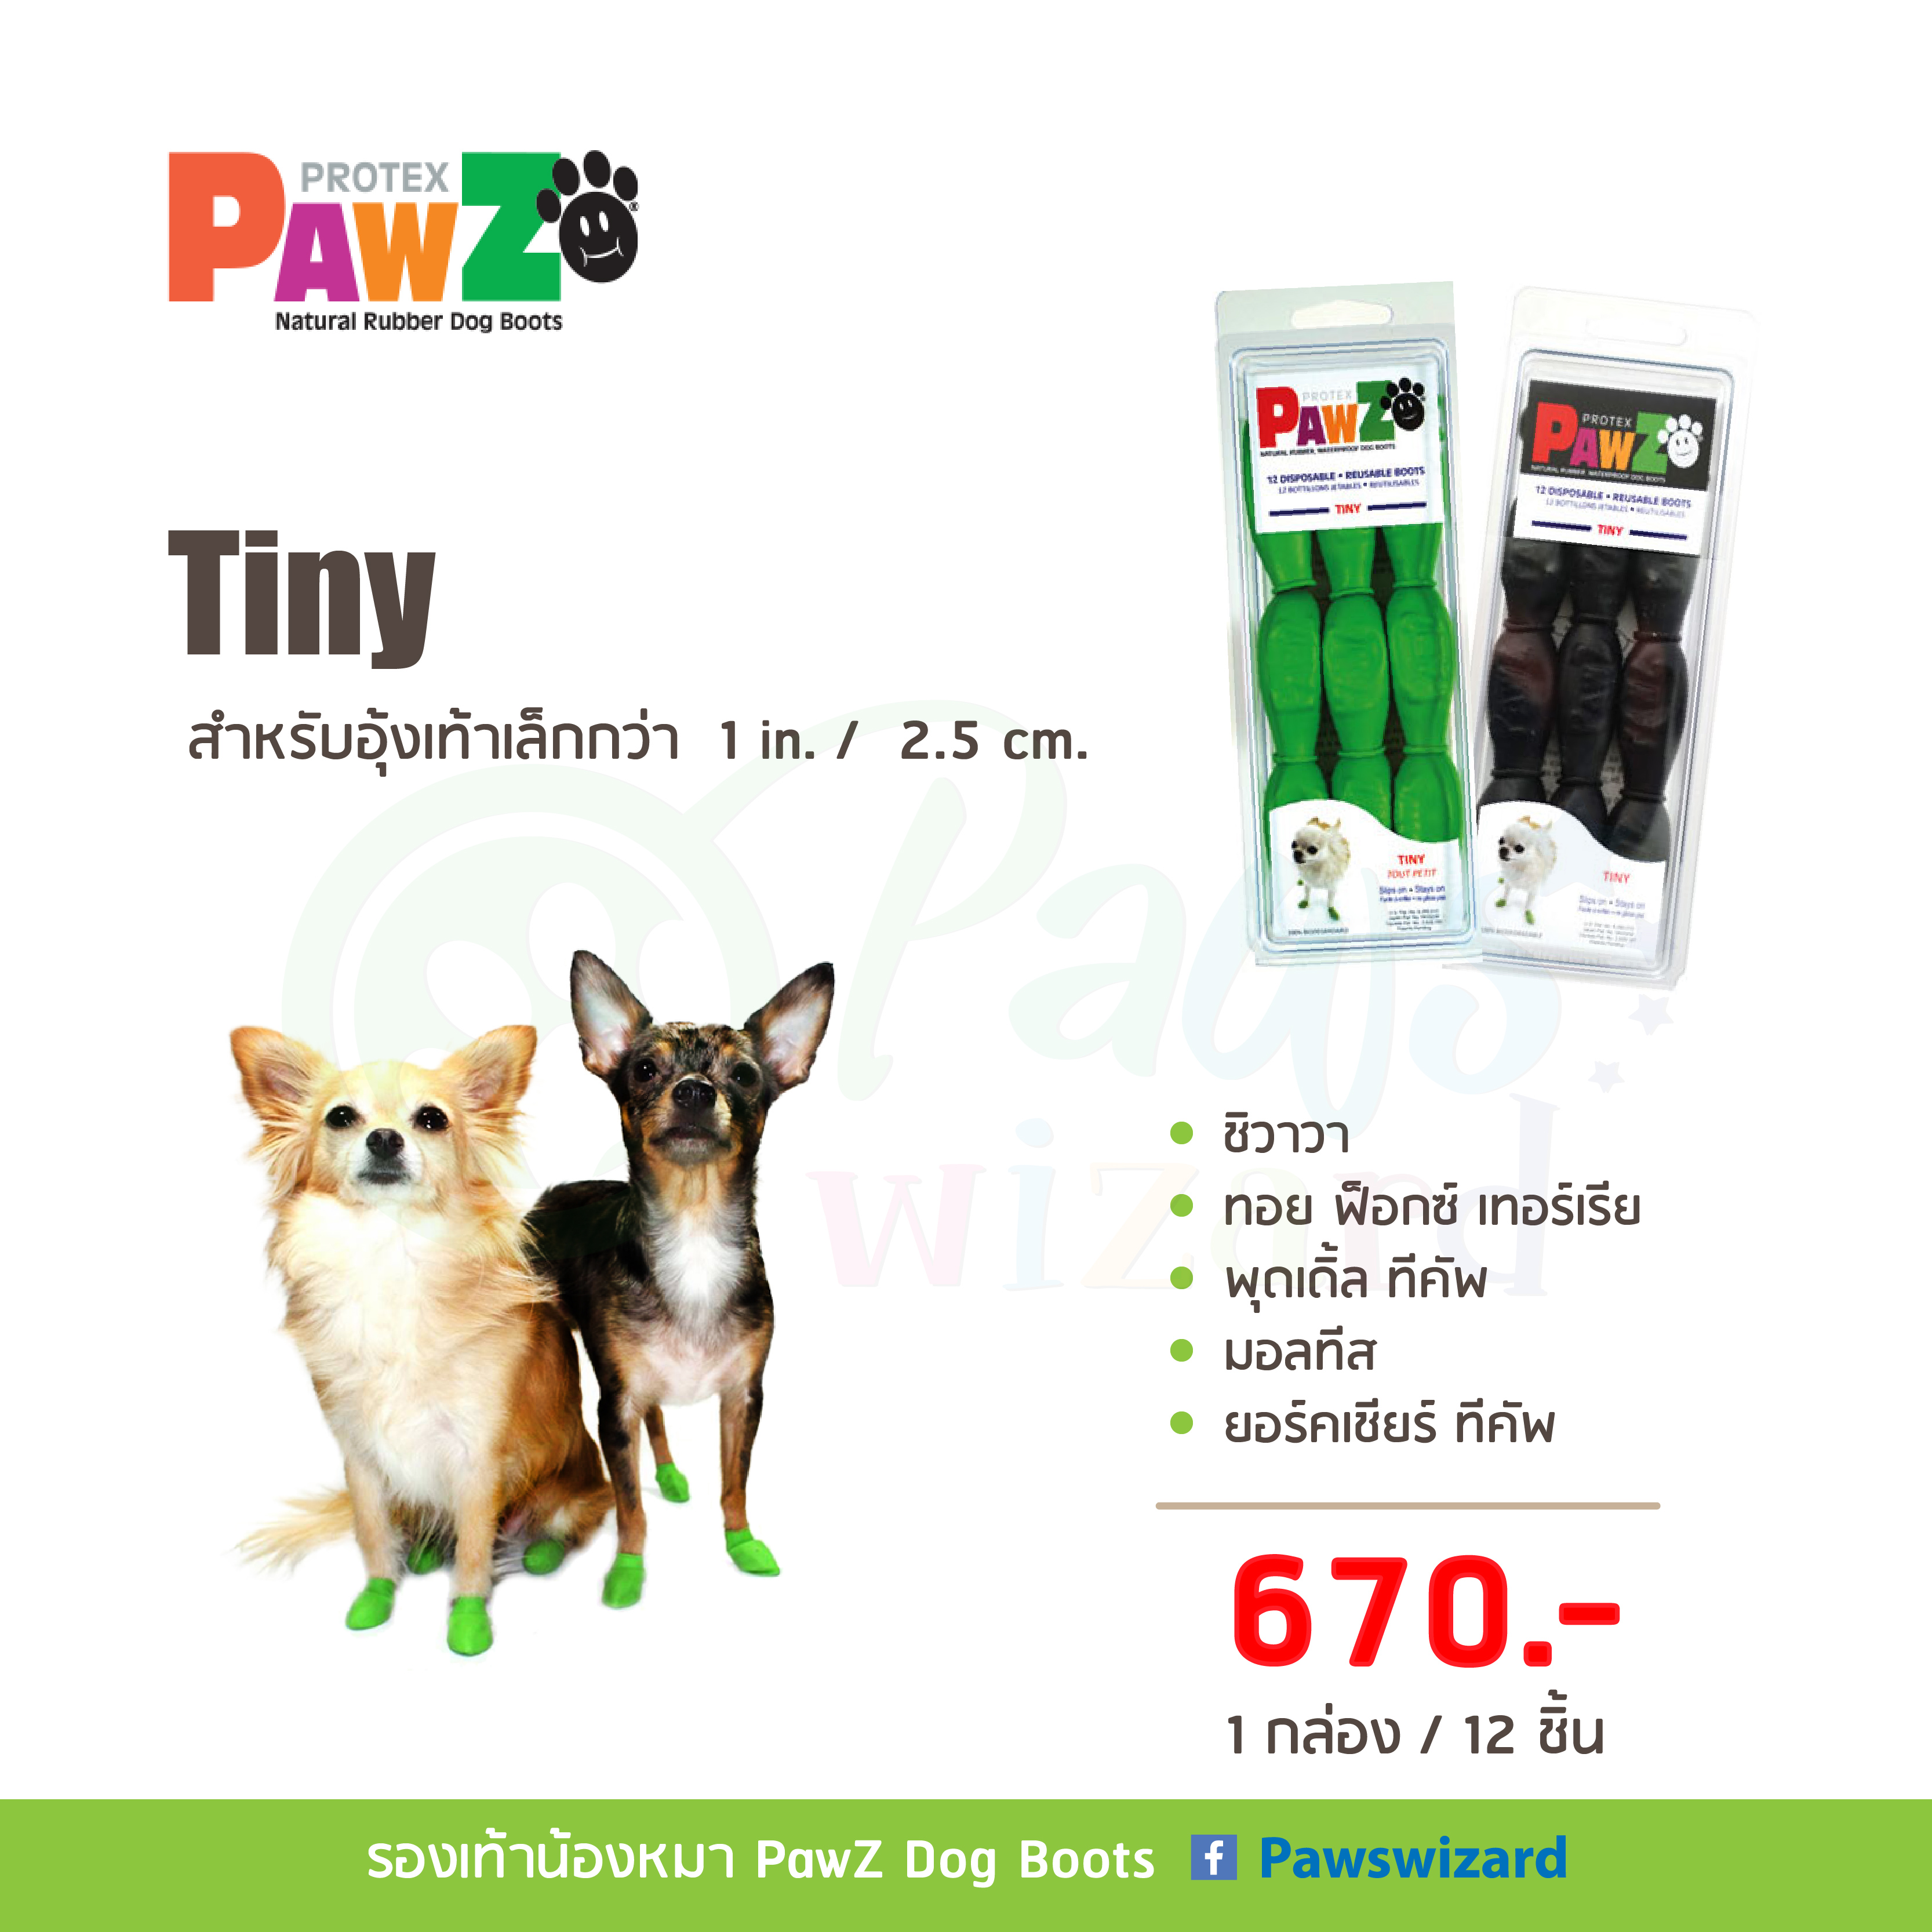 PawZ Dog Boots รองเท้าสุนัข(12ชิ้น) รองเท้าสุนัขกันลื่นกันน้ำ ไซส์ Tiny สำหรับอุ้งเท้าเล็กกว่า 1 in. / 2.5 cm.